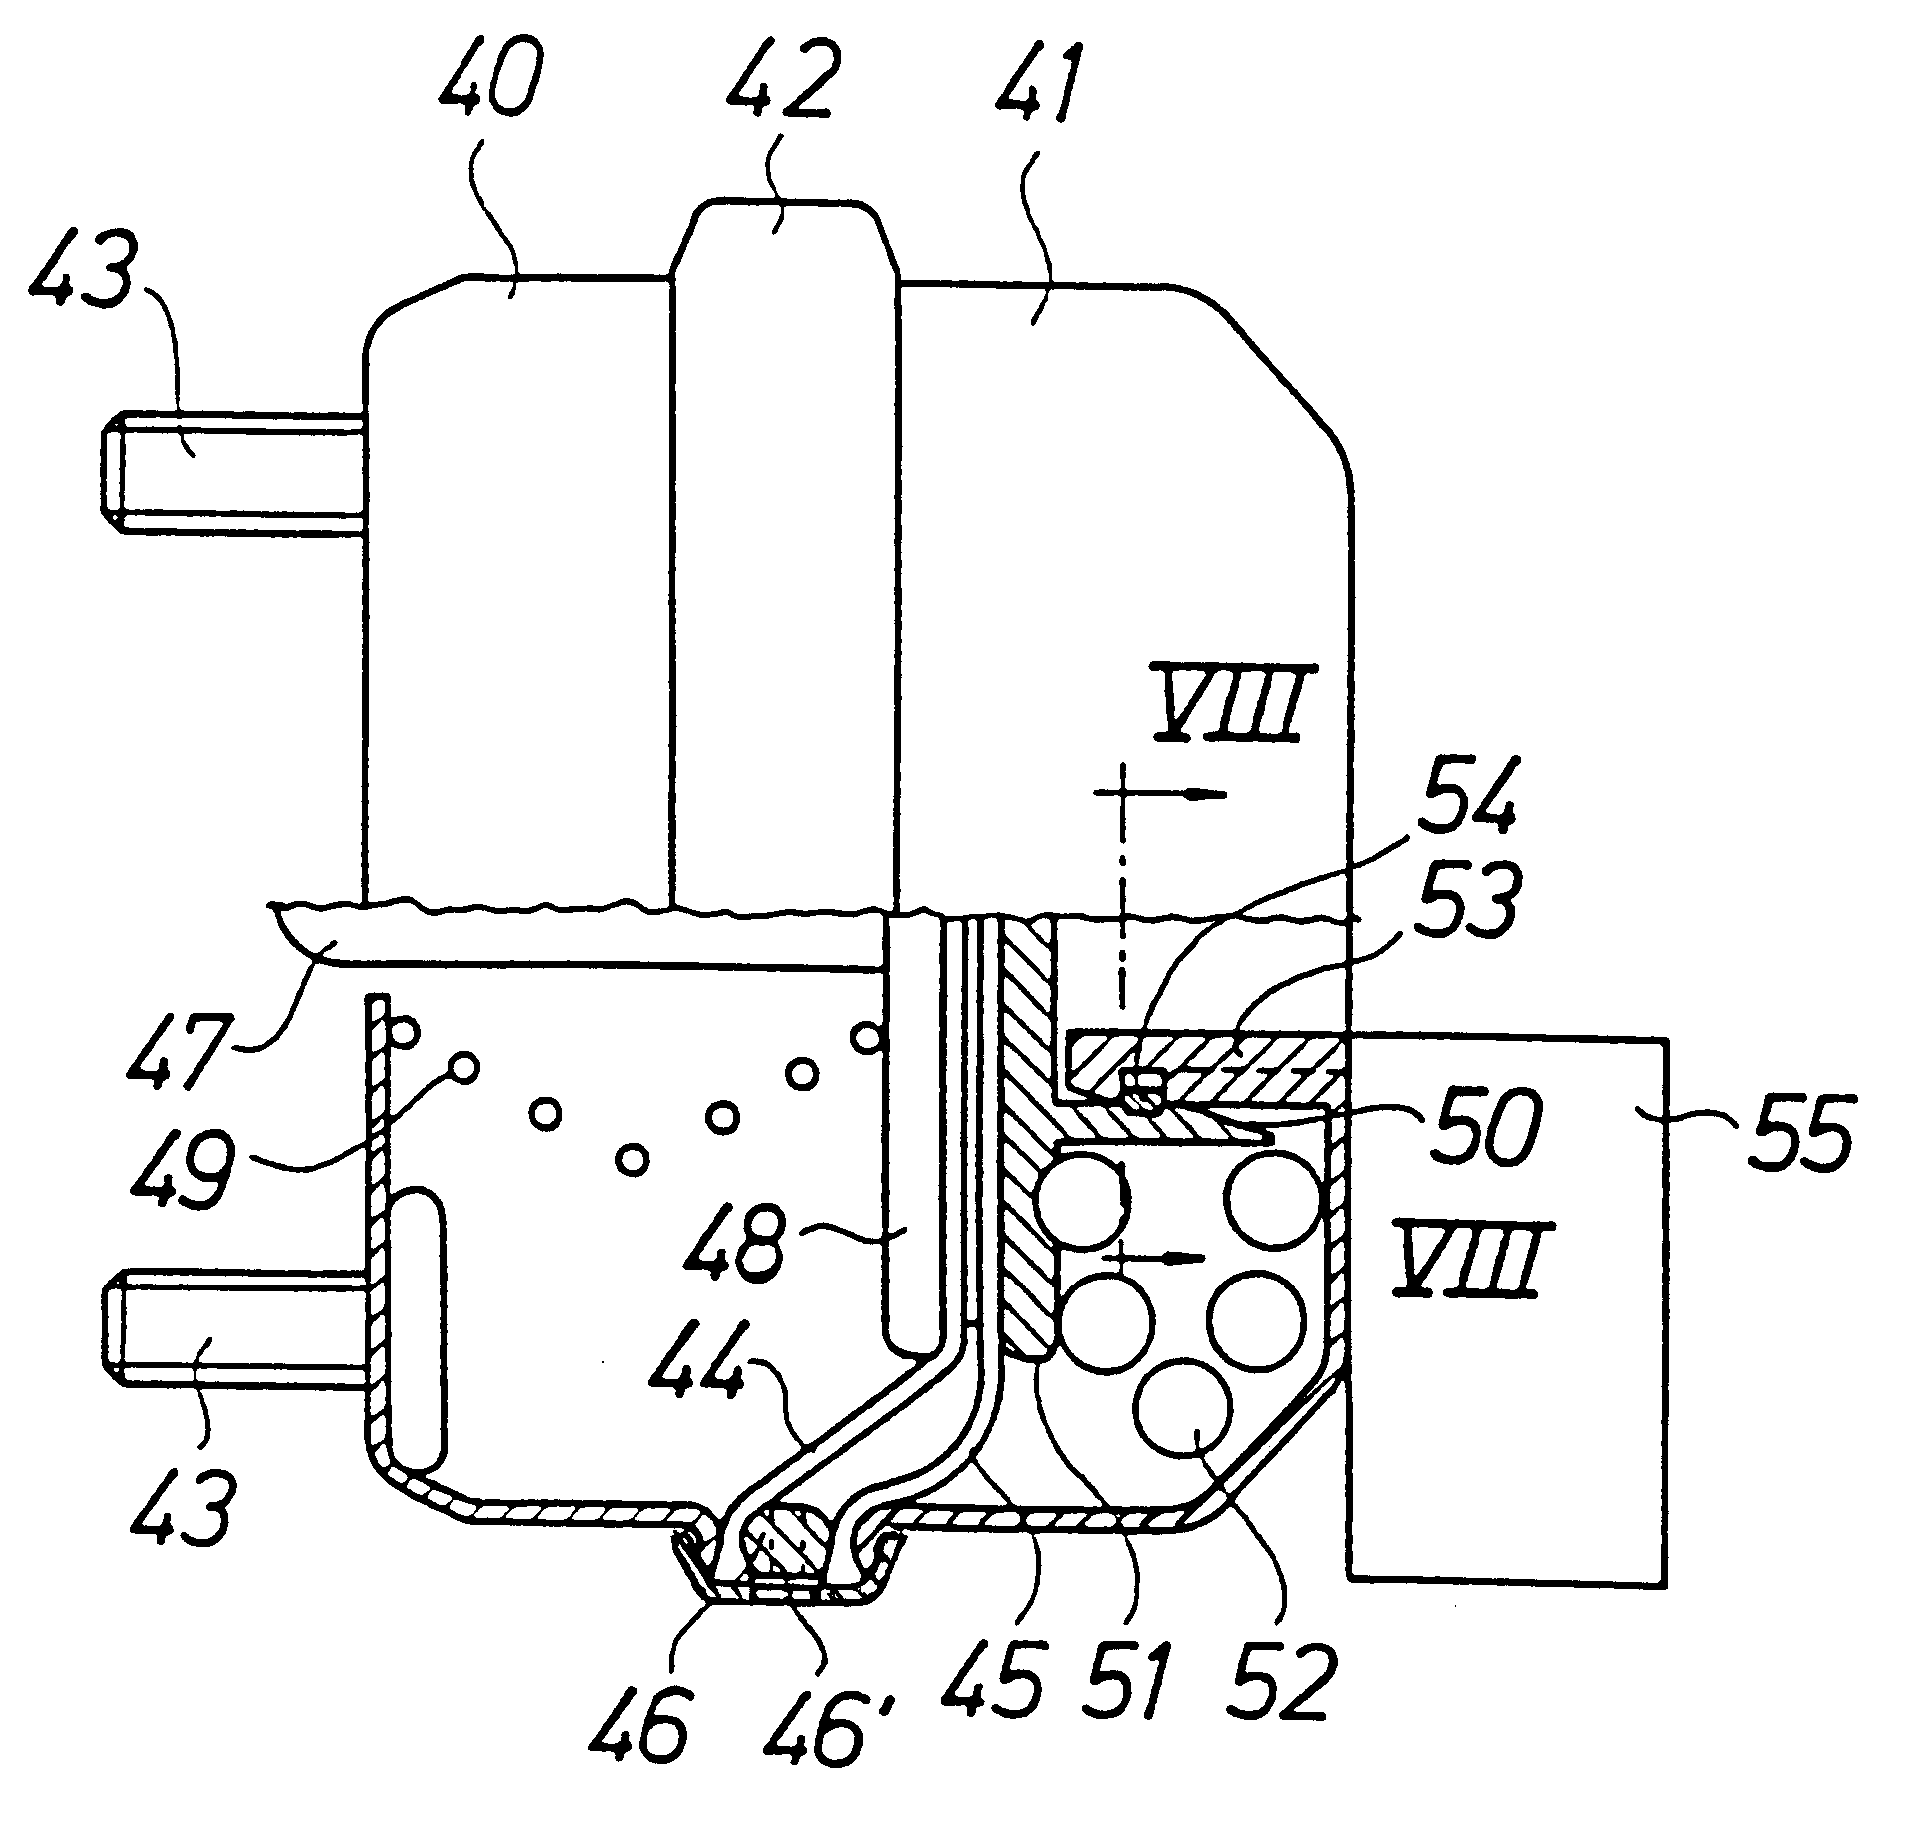 Safety brake arrangement in a brake actuator